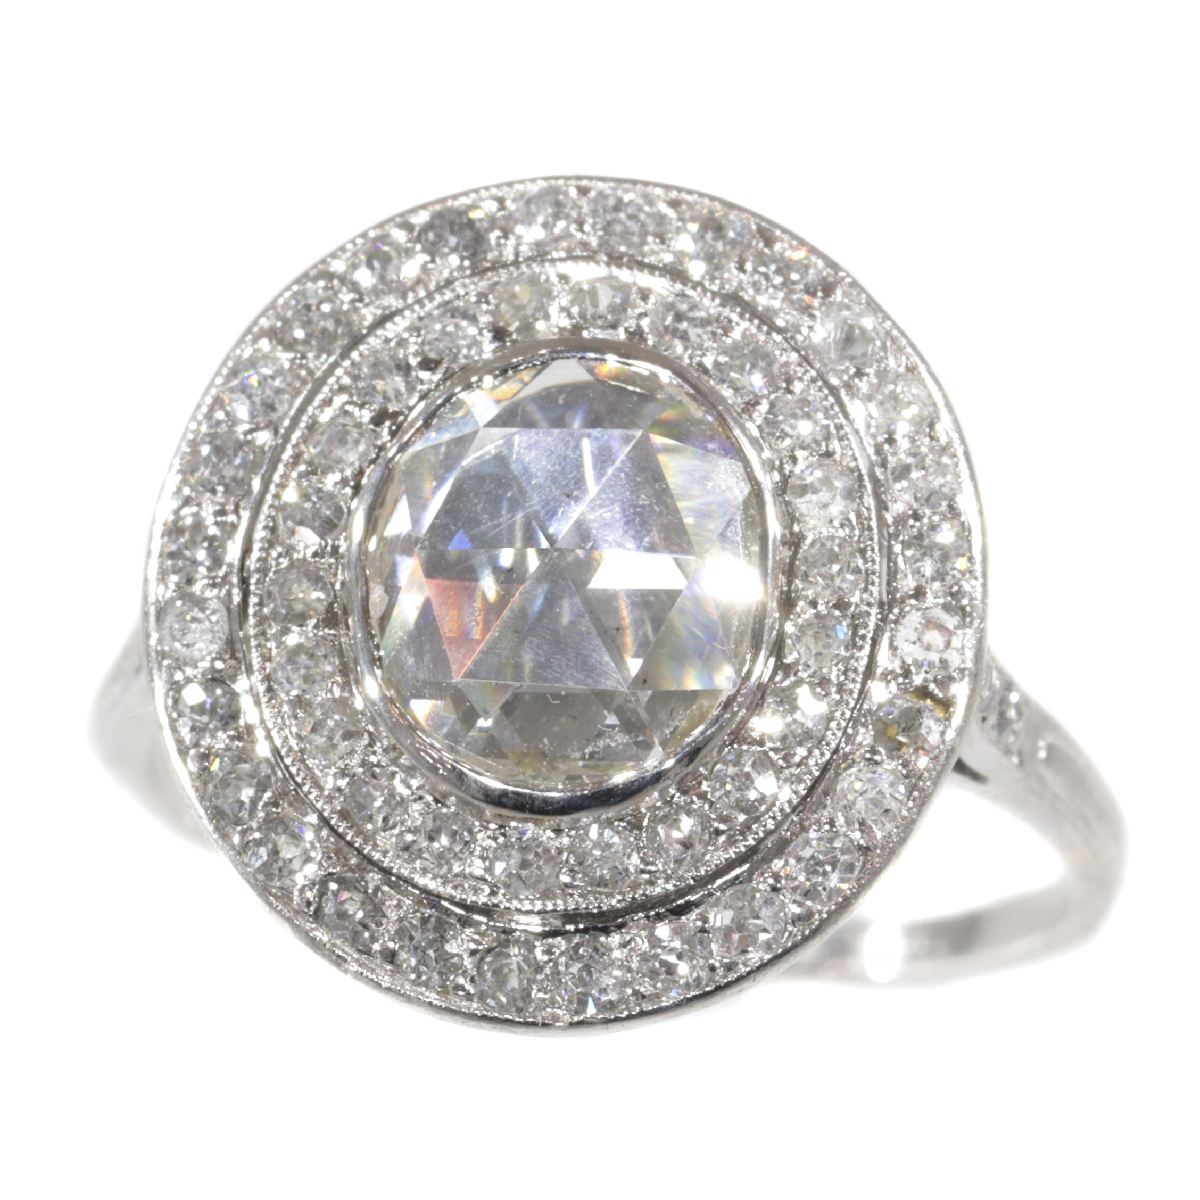 Art Deco platinum diamond engagement ring with large rose cut diamond